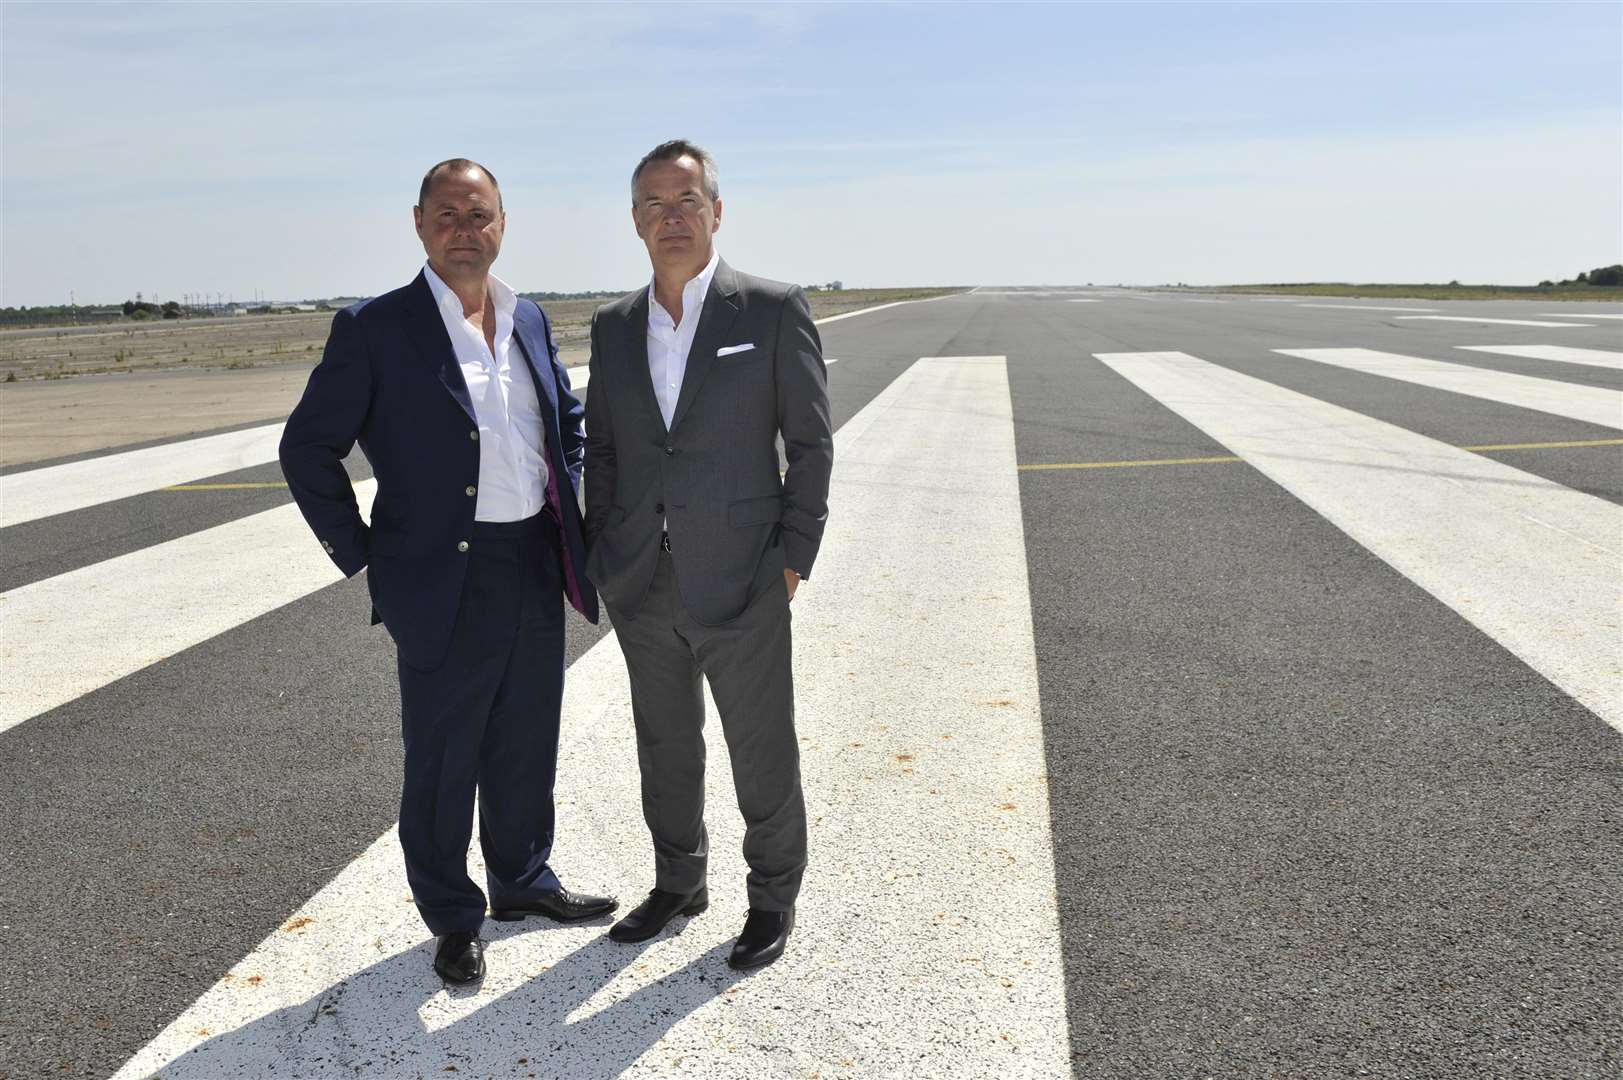 Property developers Trevor Cartner and Chris Musgrave own the former Manston airport